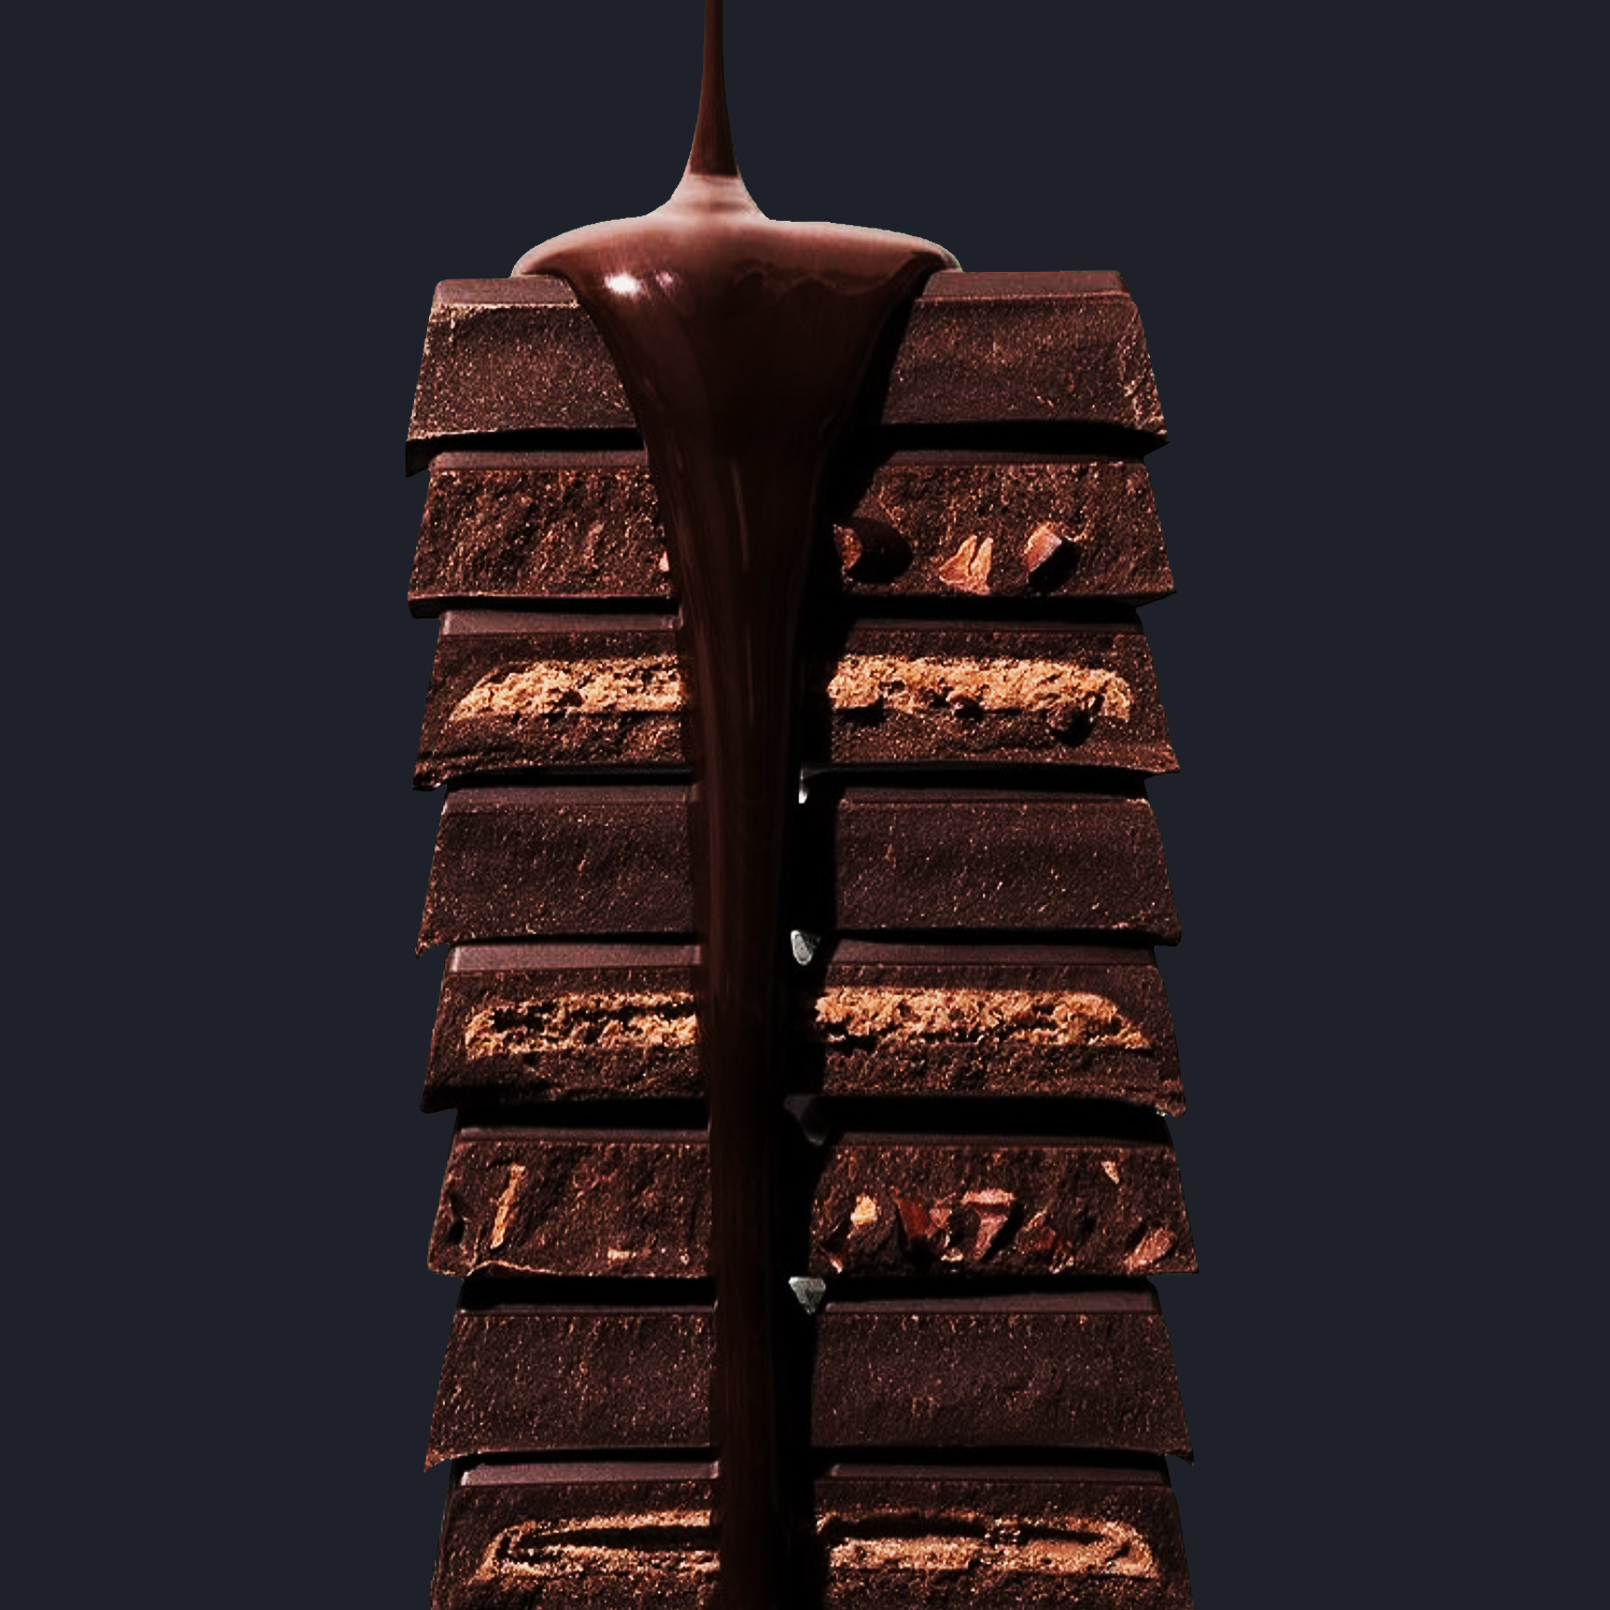 A stack of Hu chocolate bars